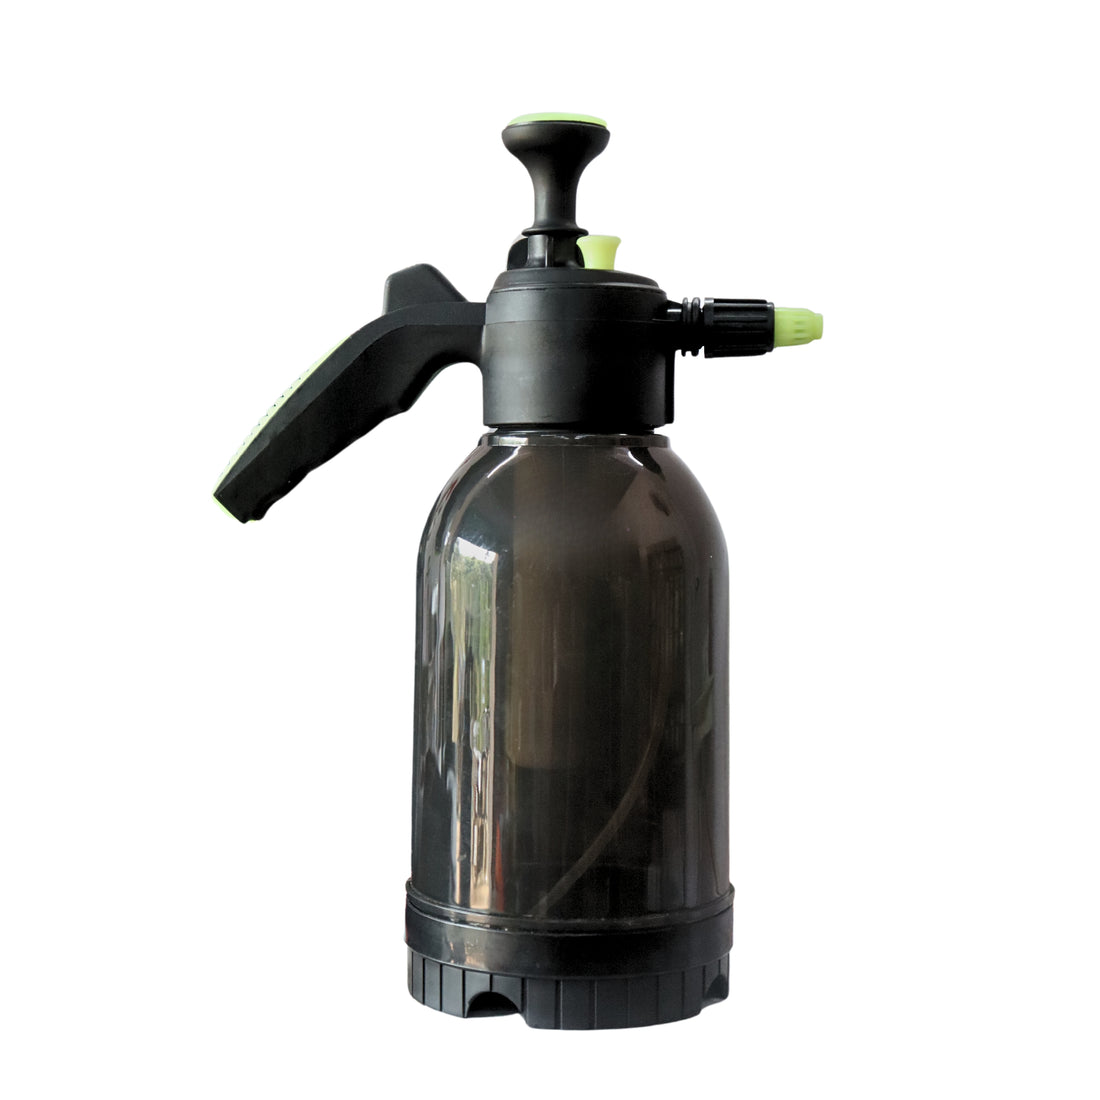 2 Litre Heavy Duty Garden Pressure Sprayer – Black Colour